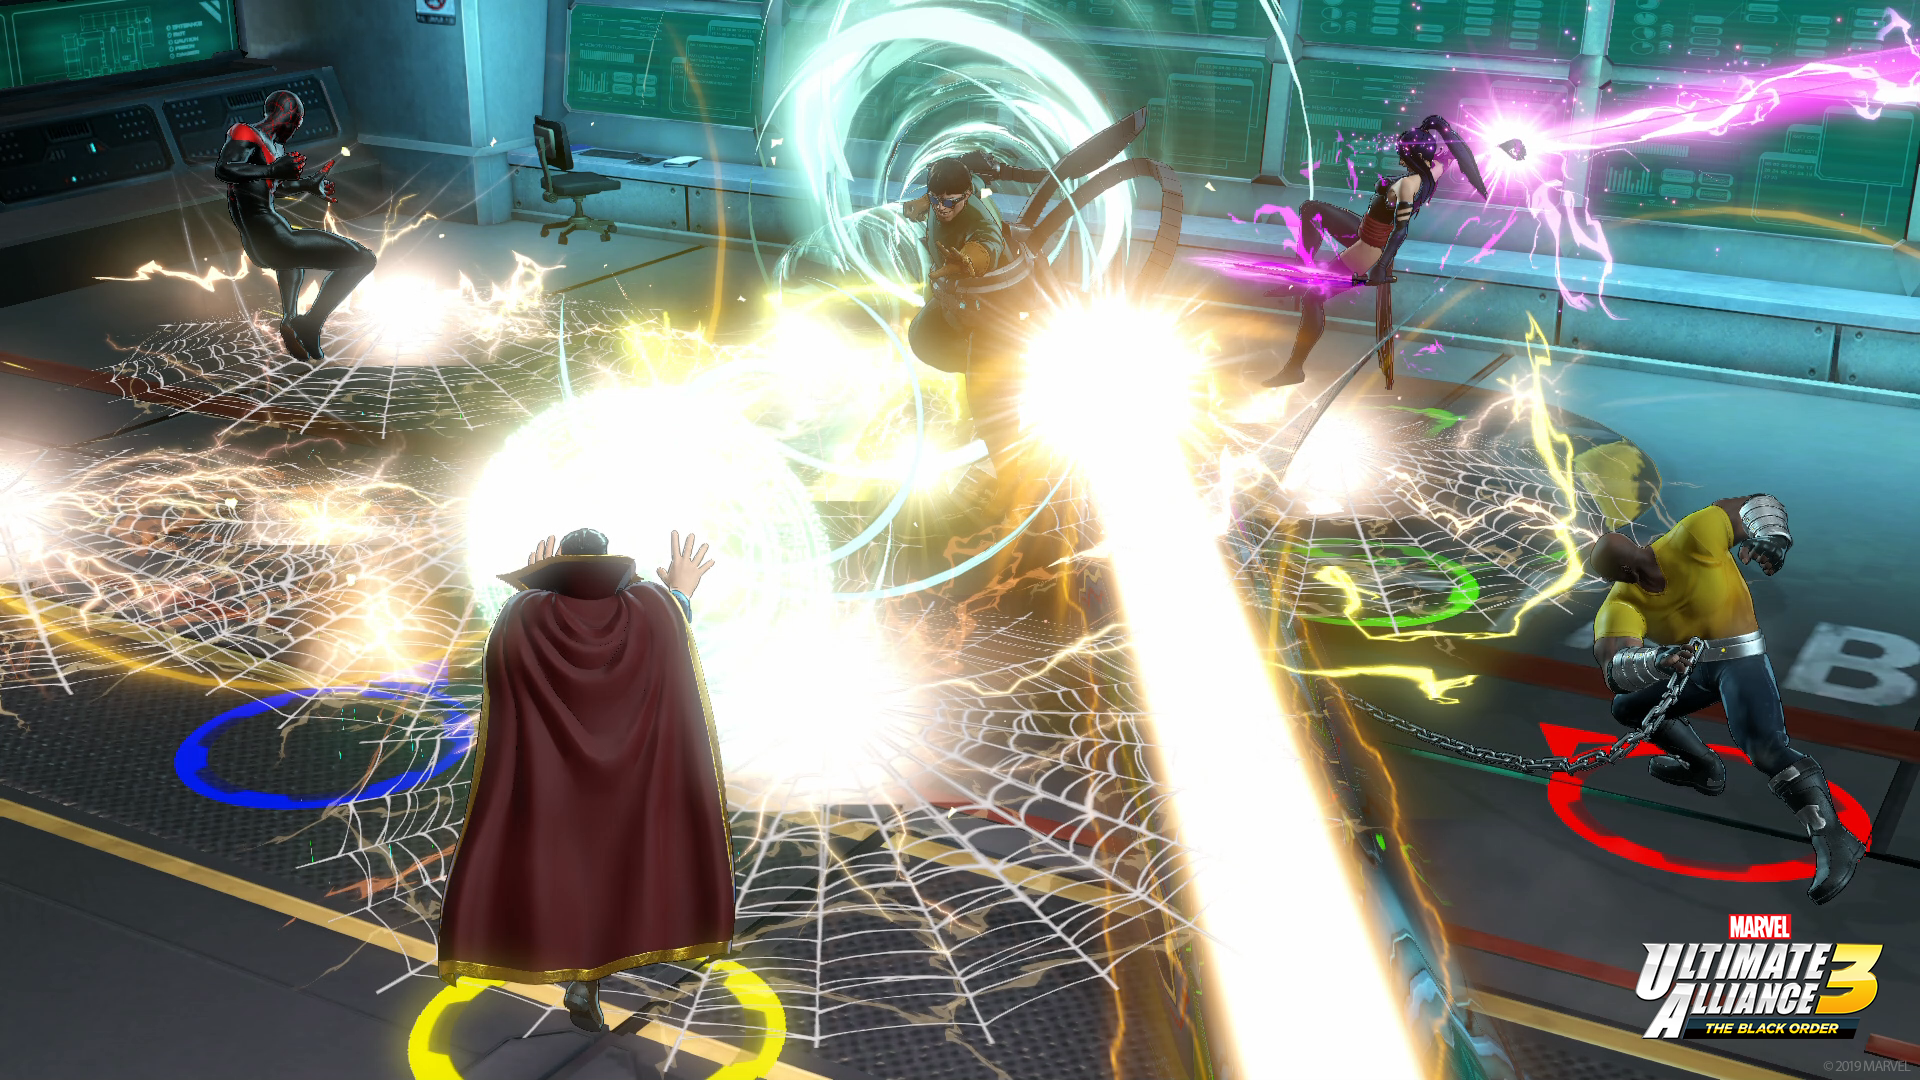 Marvel Ultimate Alliance 3 powers